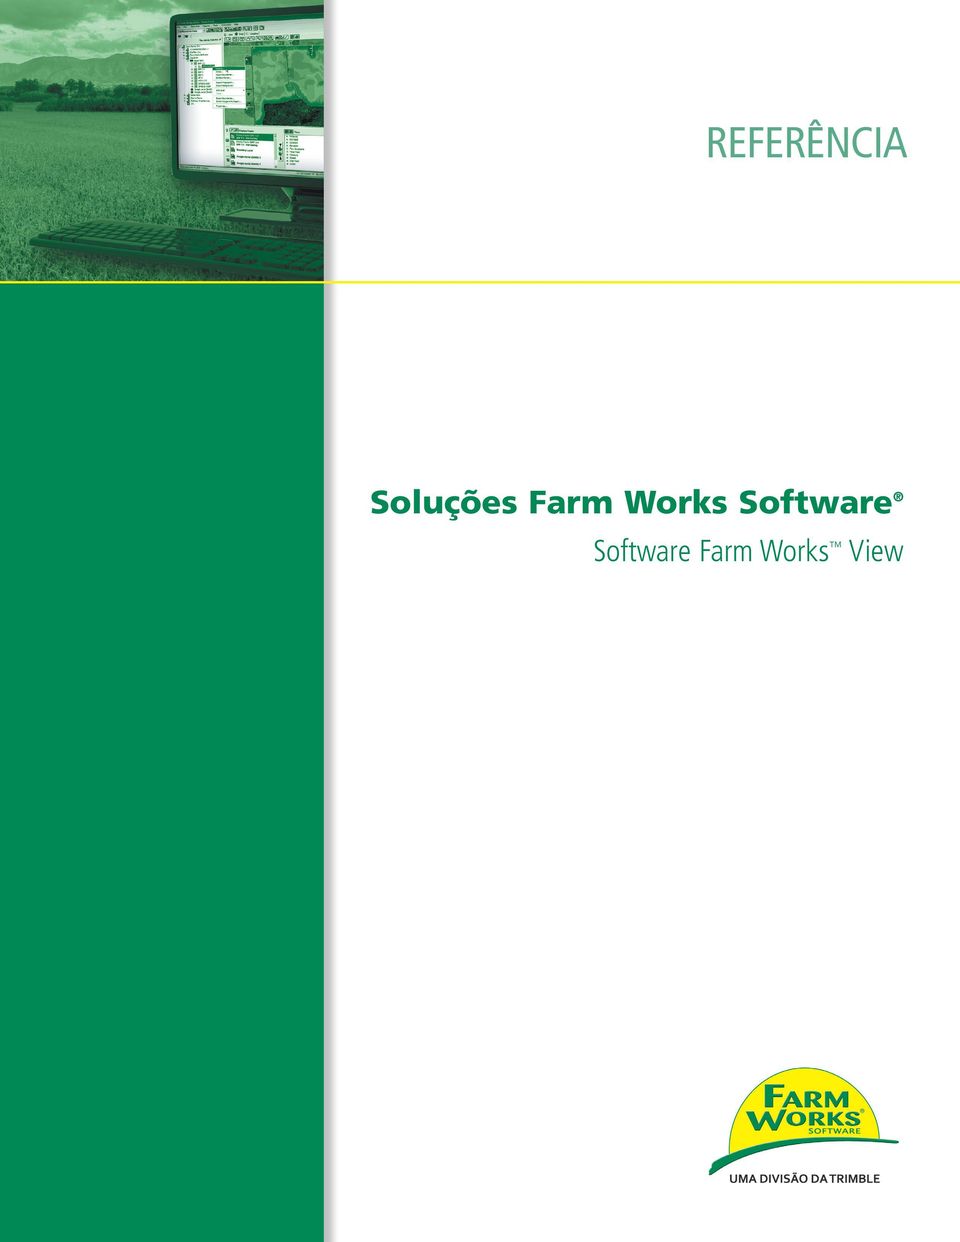 Works Software